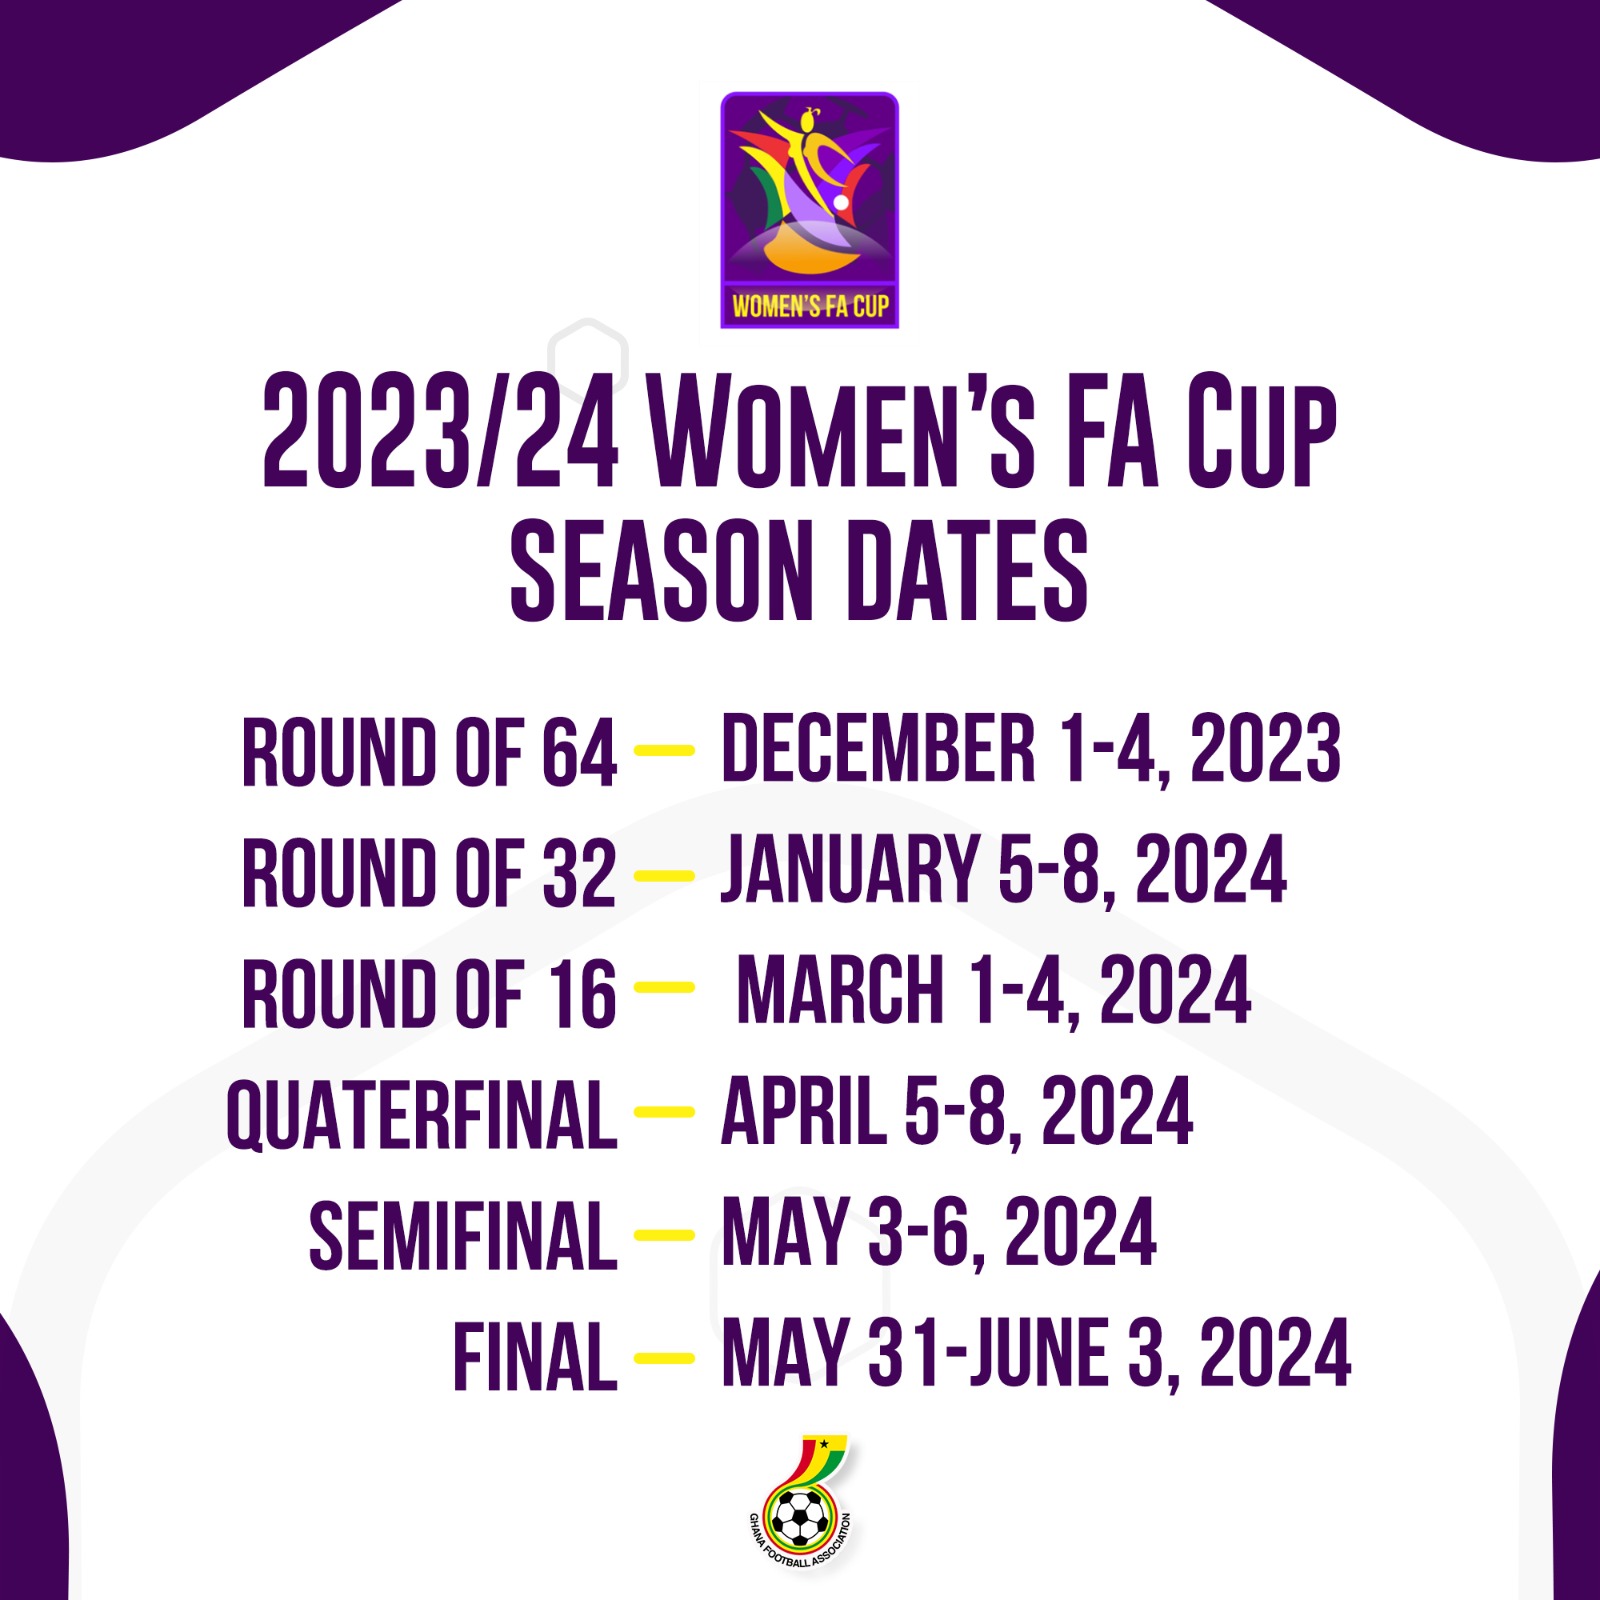 2023/24 Women's FA Cup Match dates announced